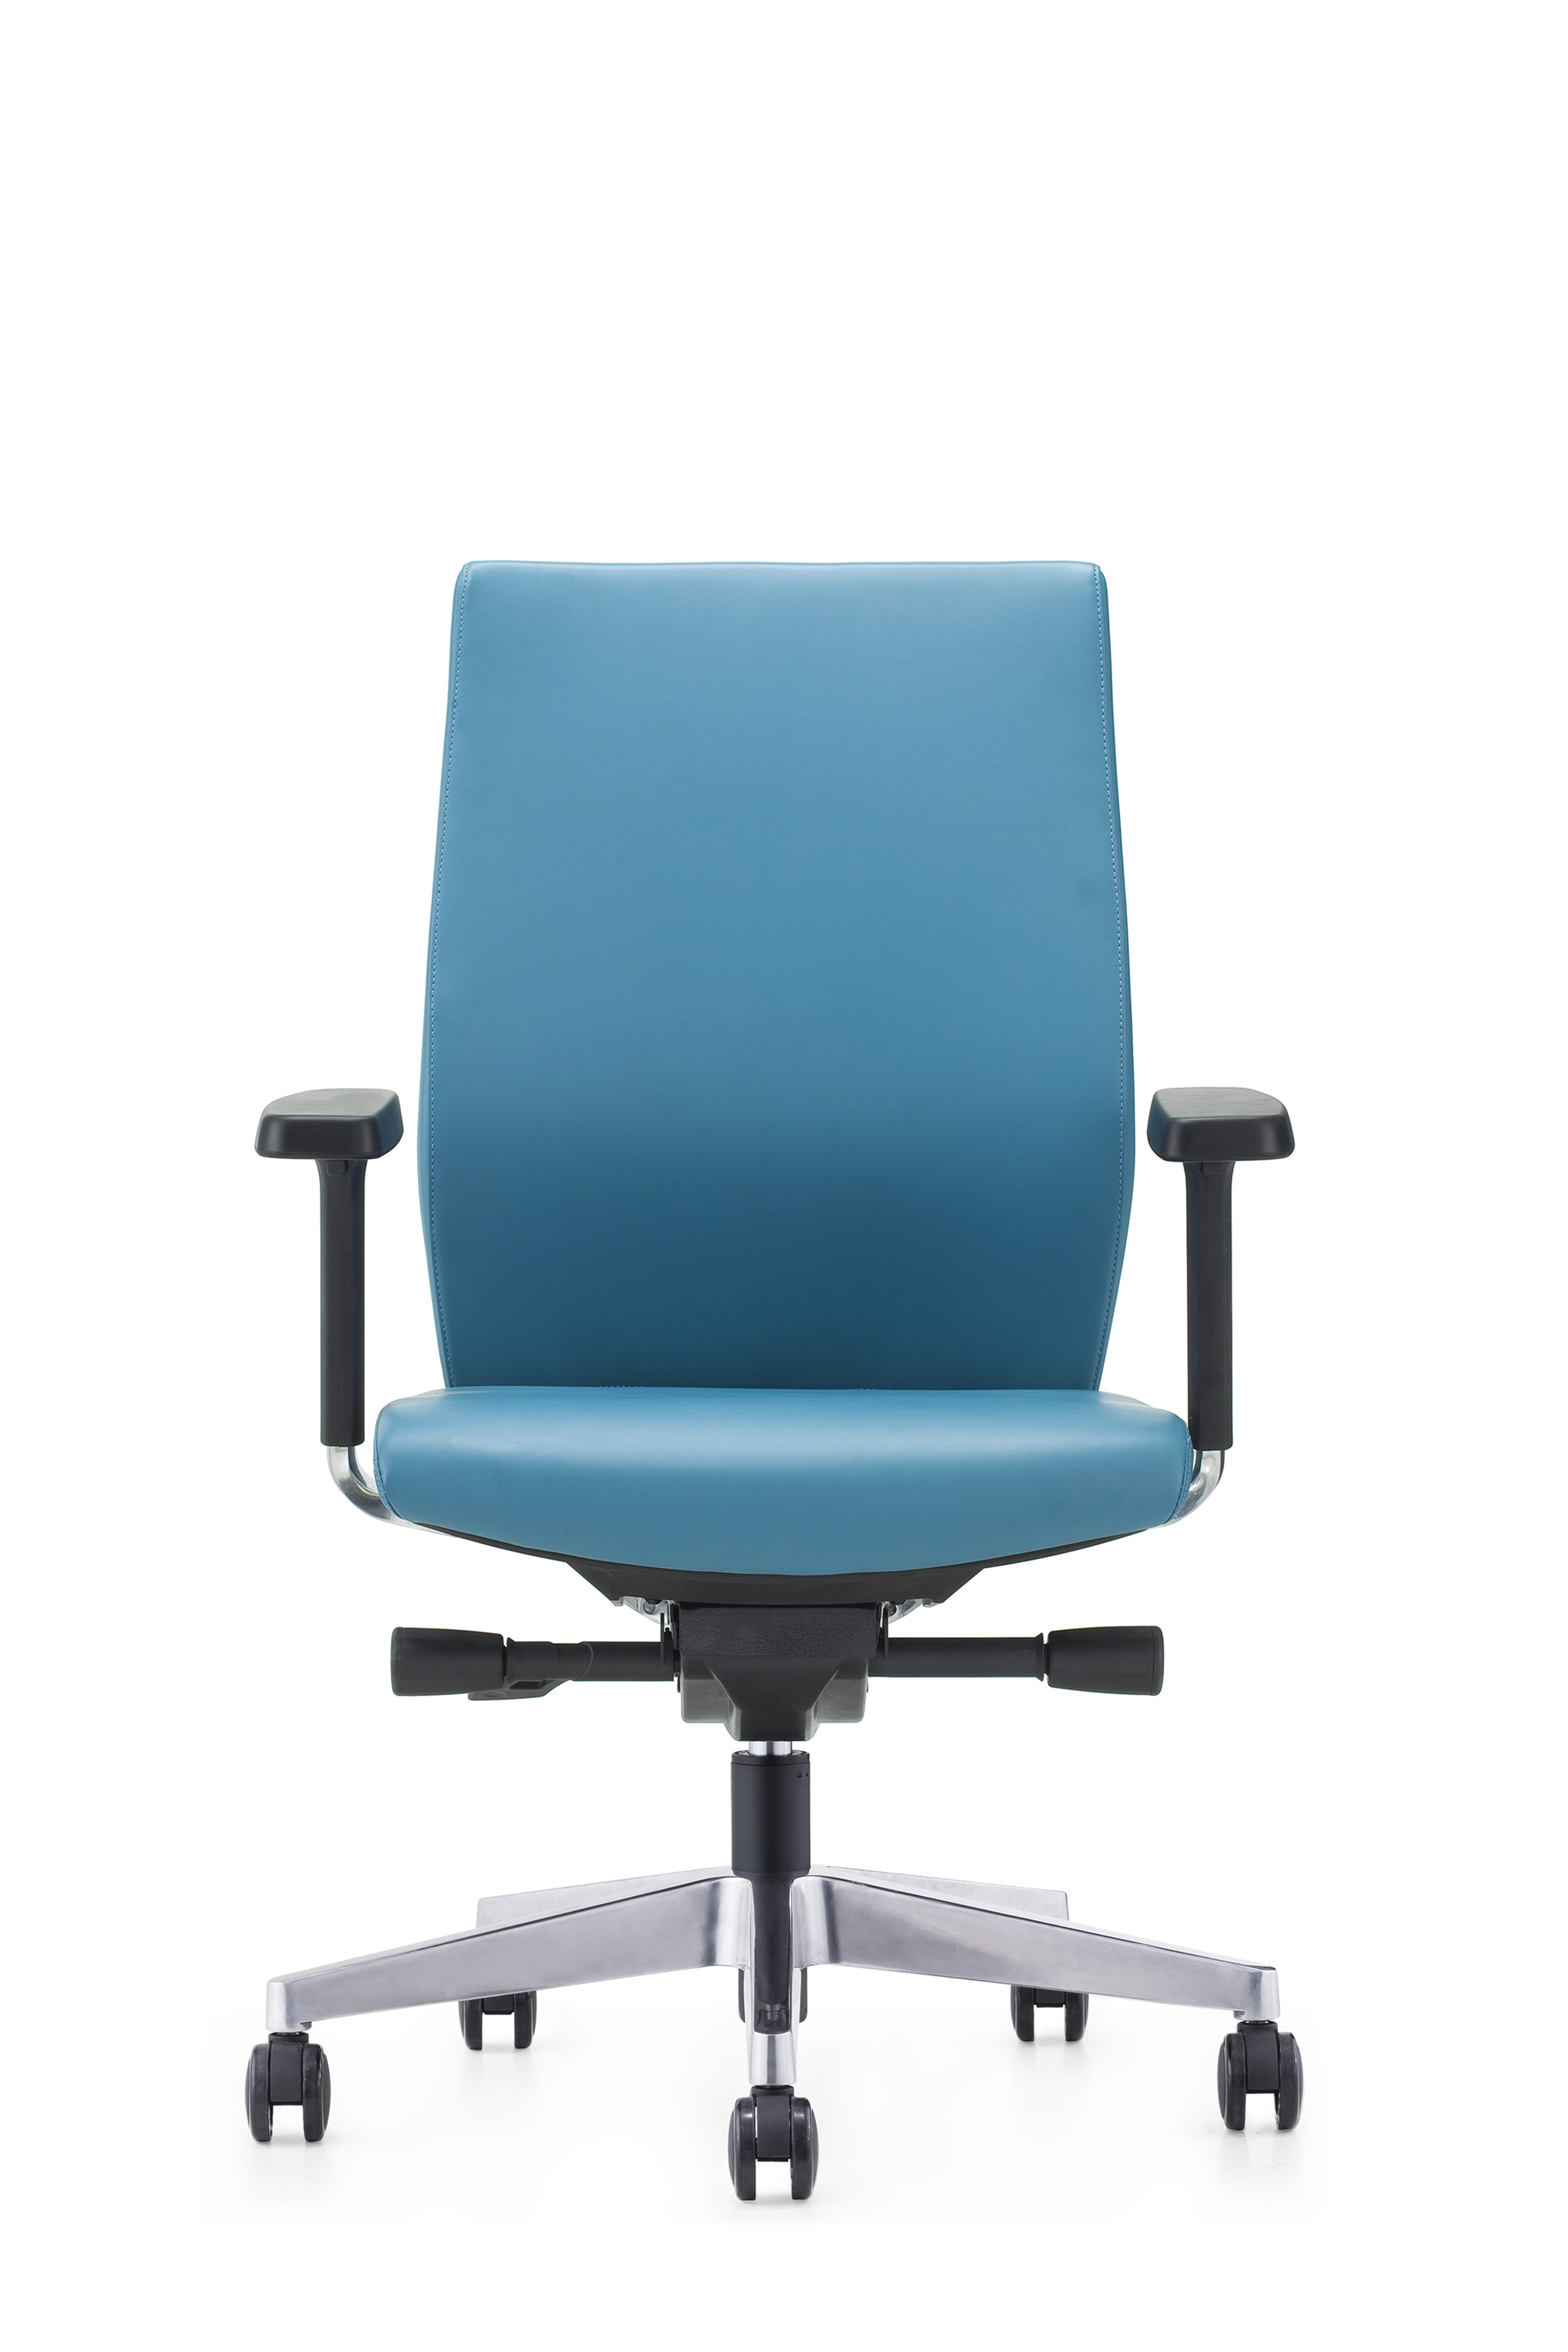 New Fashion Design for Mesh Fabric Chair - CH-240B – SitZone